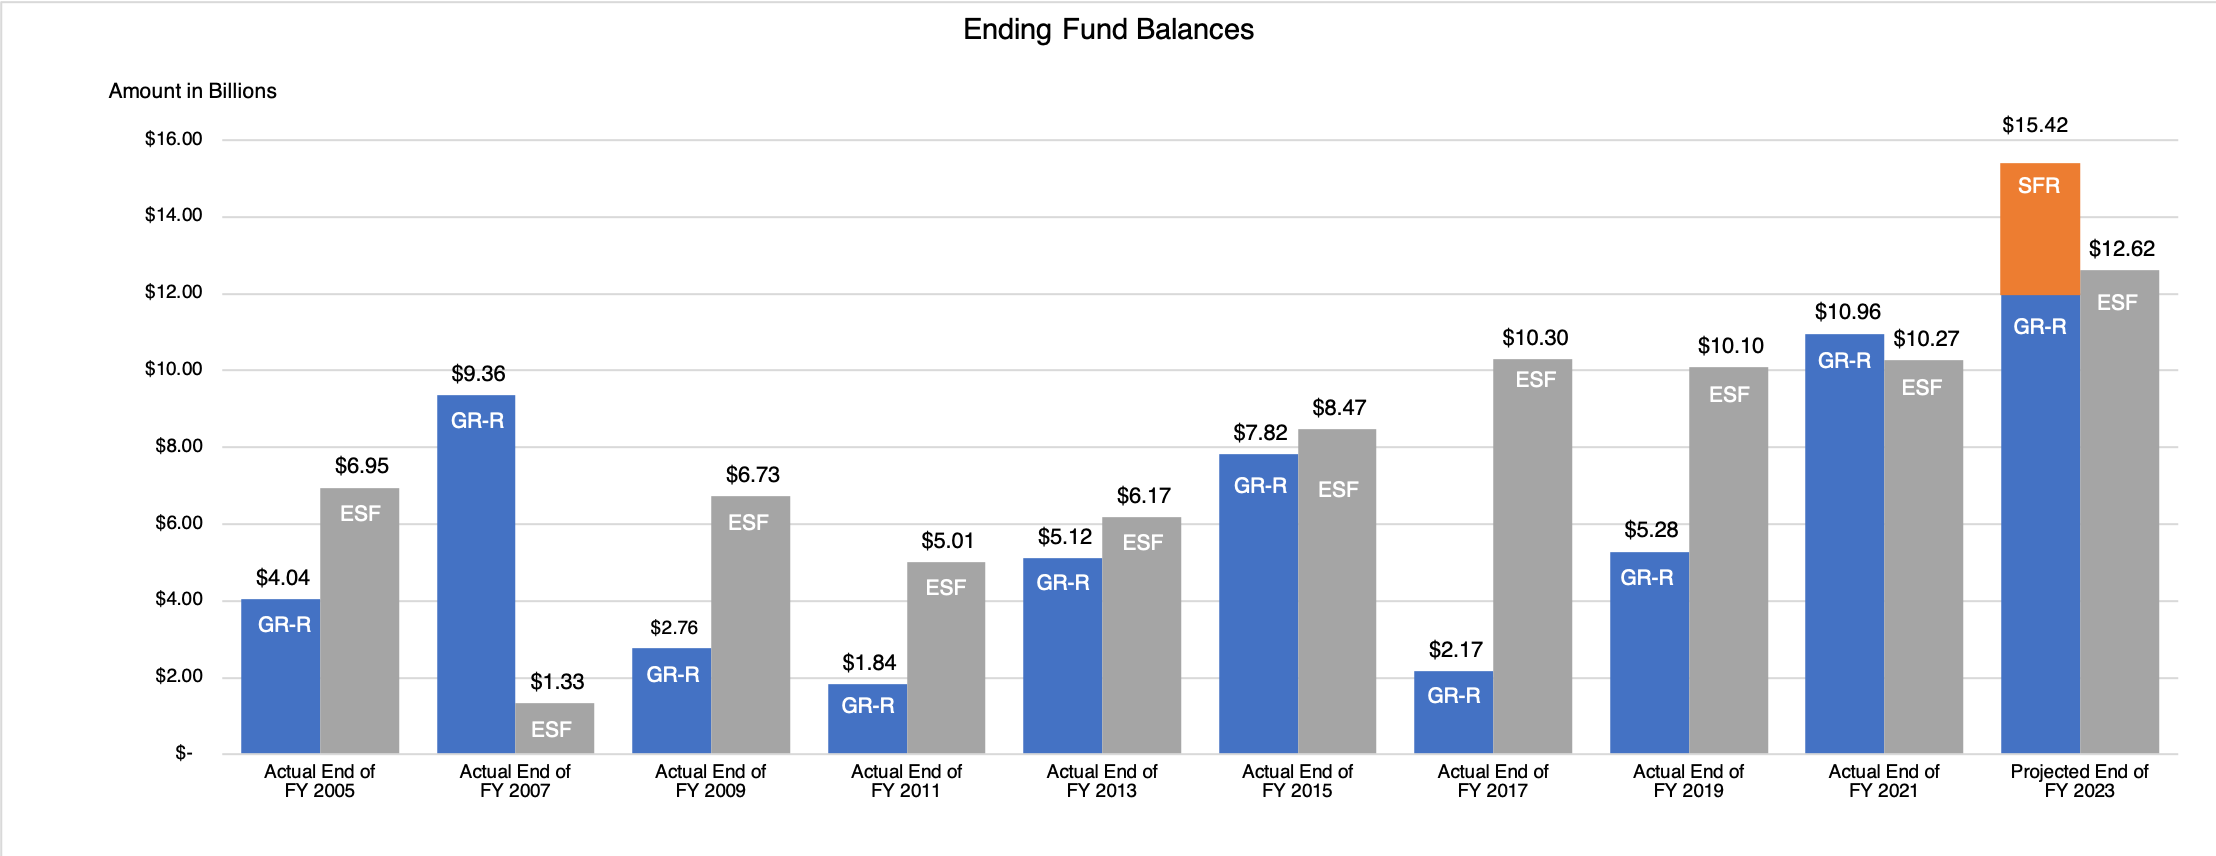 Texas Ending Fund Balances